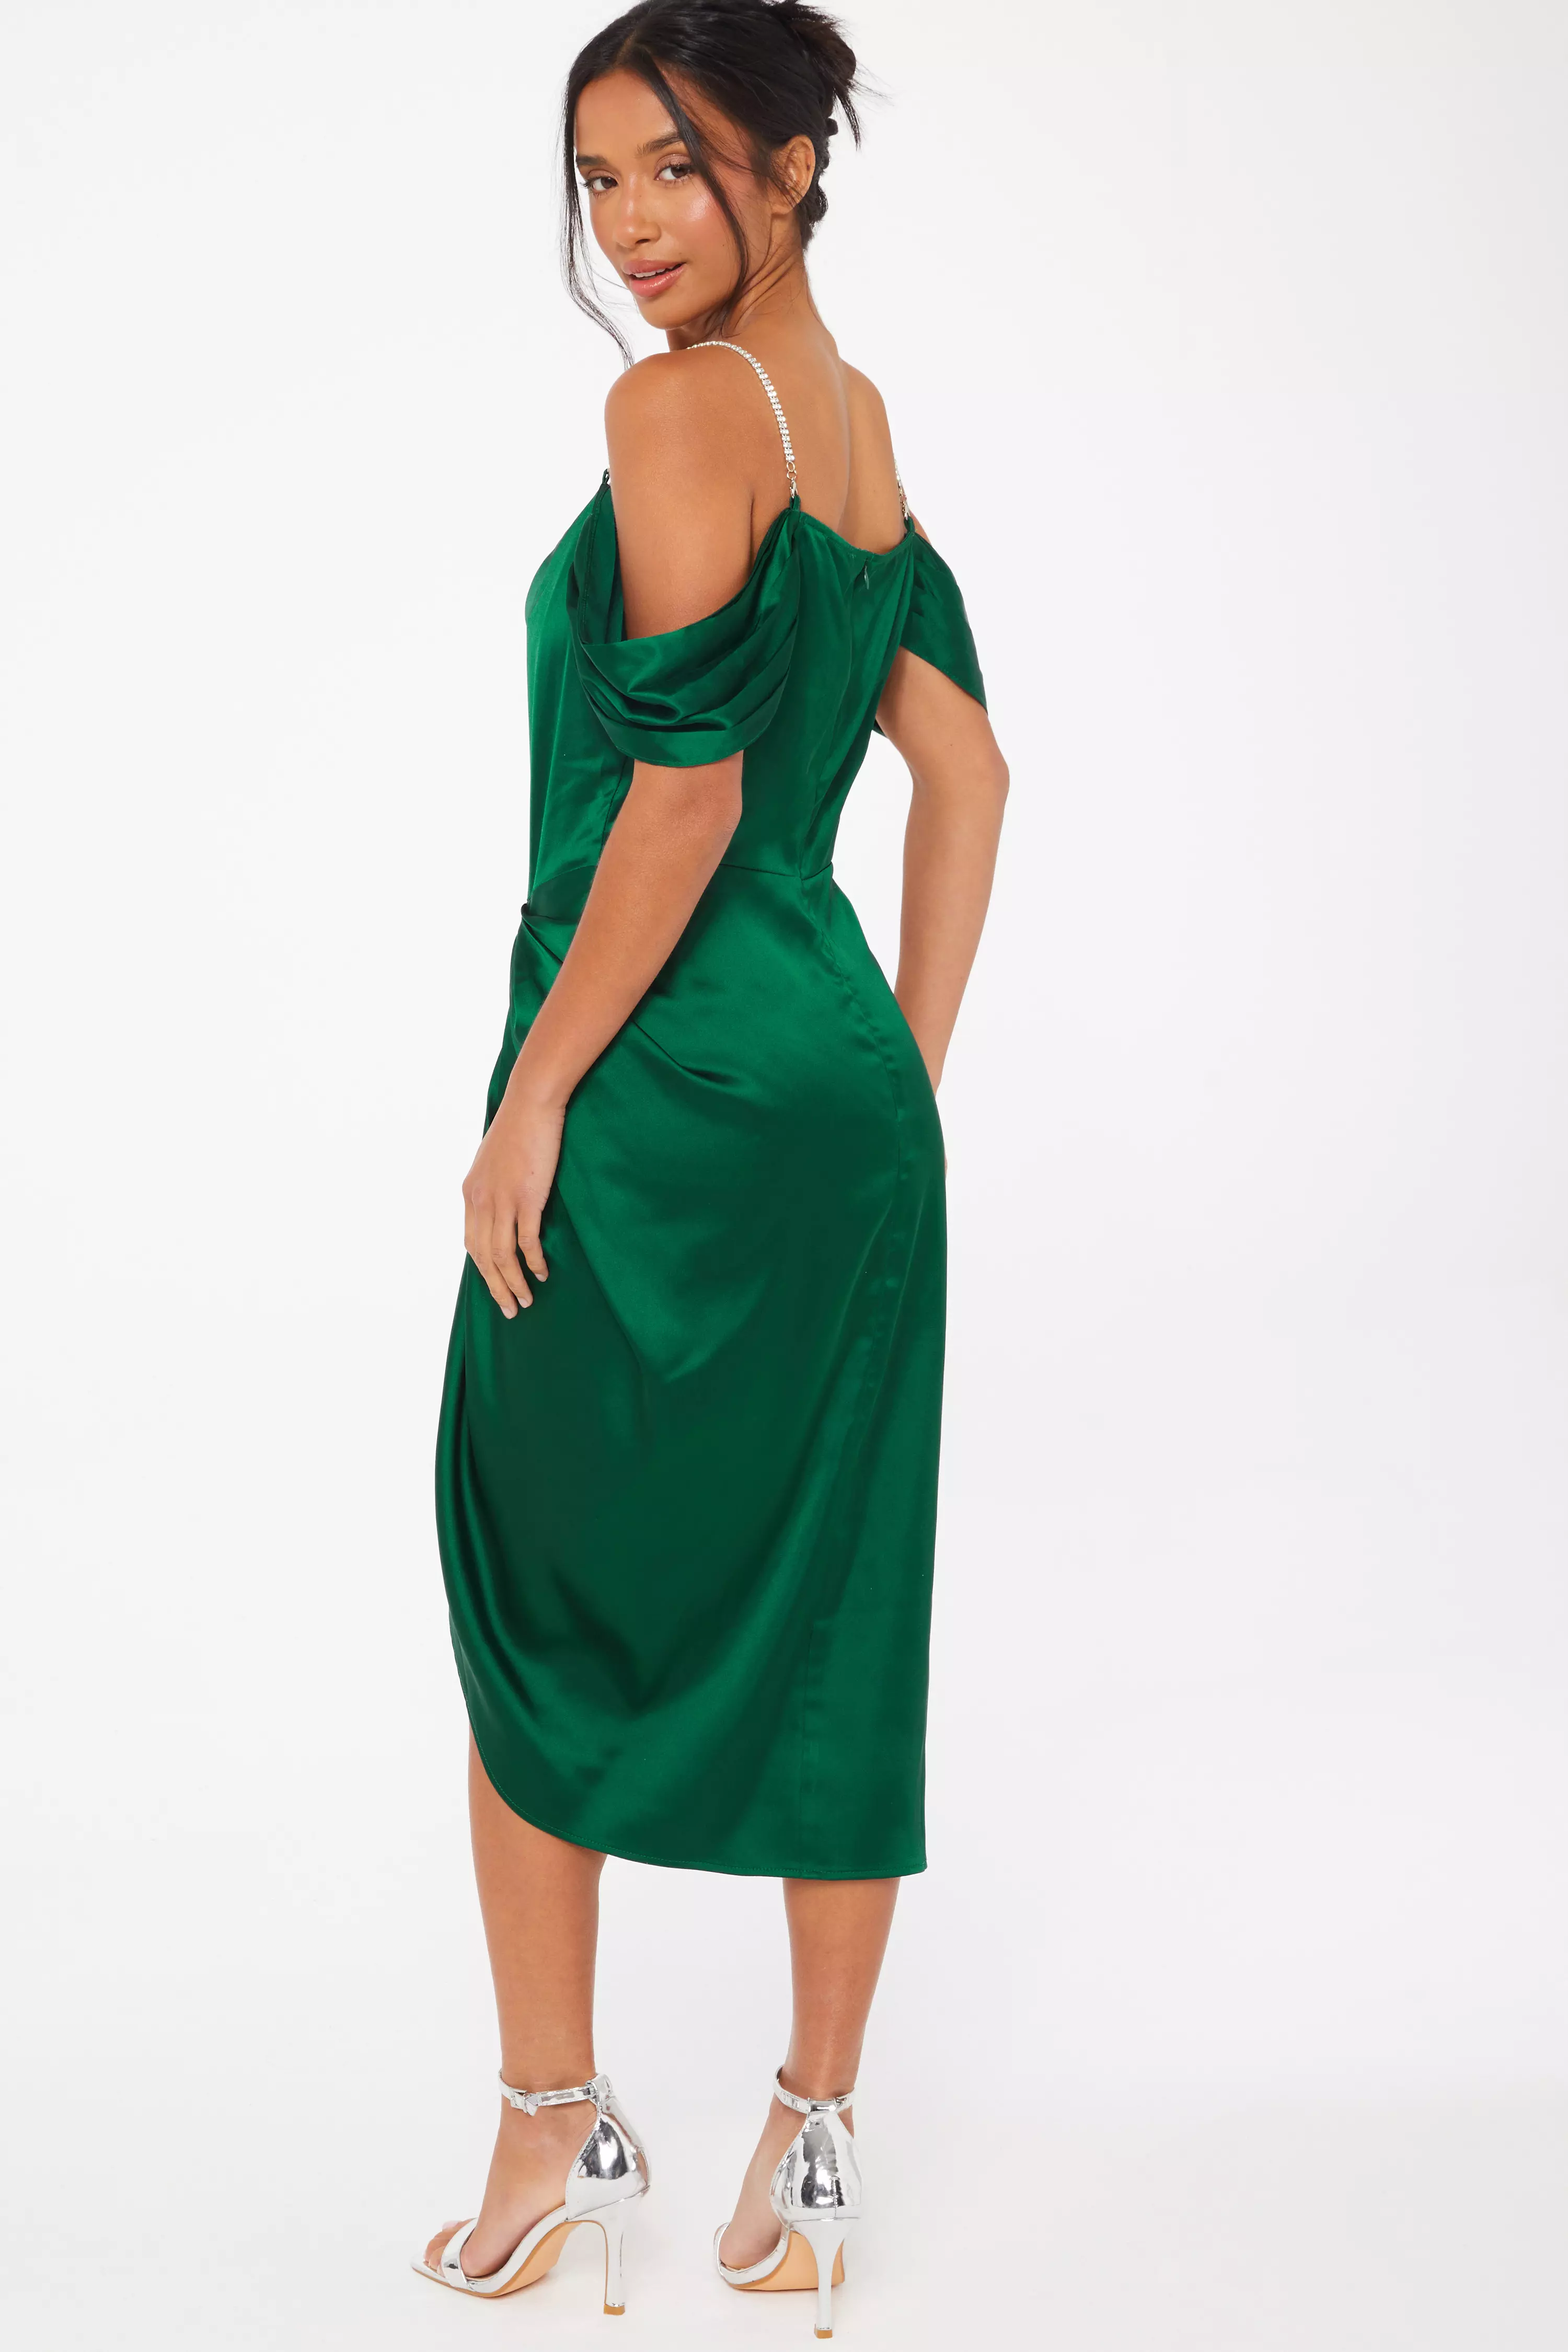 Petite Green Satin Ruched Cold Shoulder Midi Dress - QUIZ Clothing